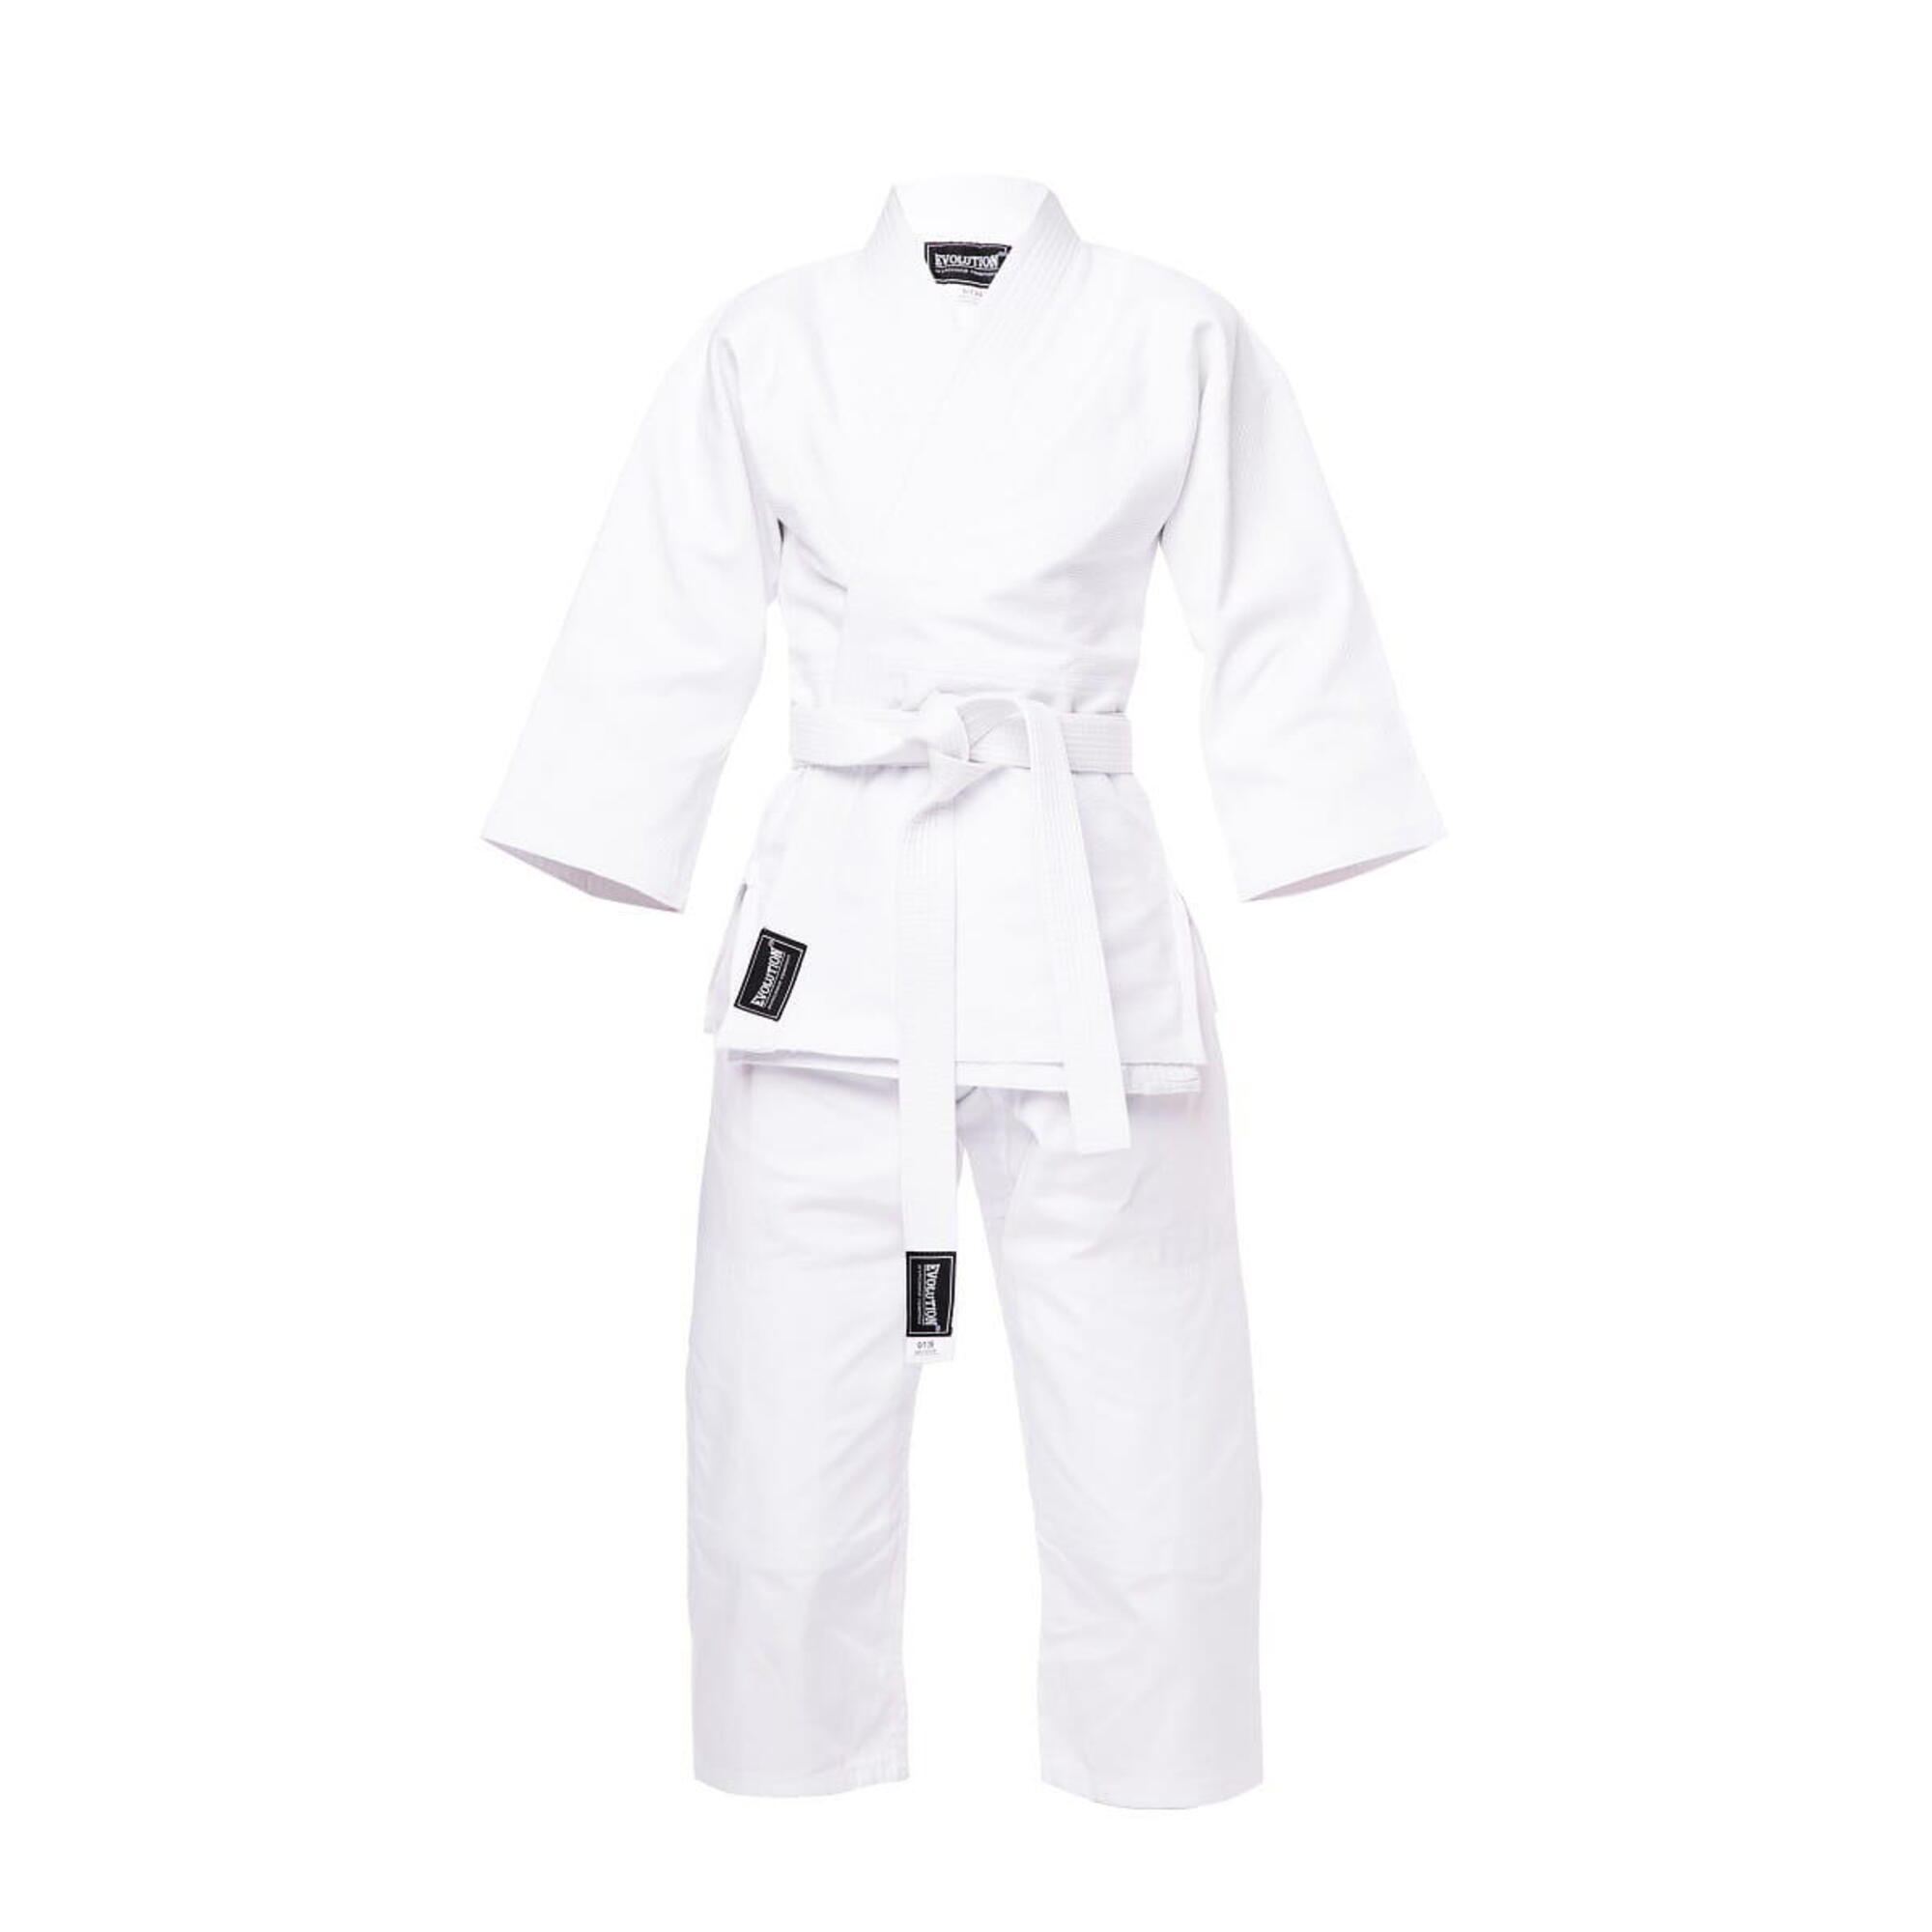 Kimono do judo judoga 450g